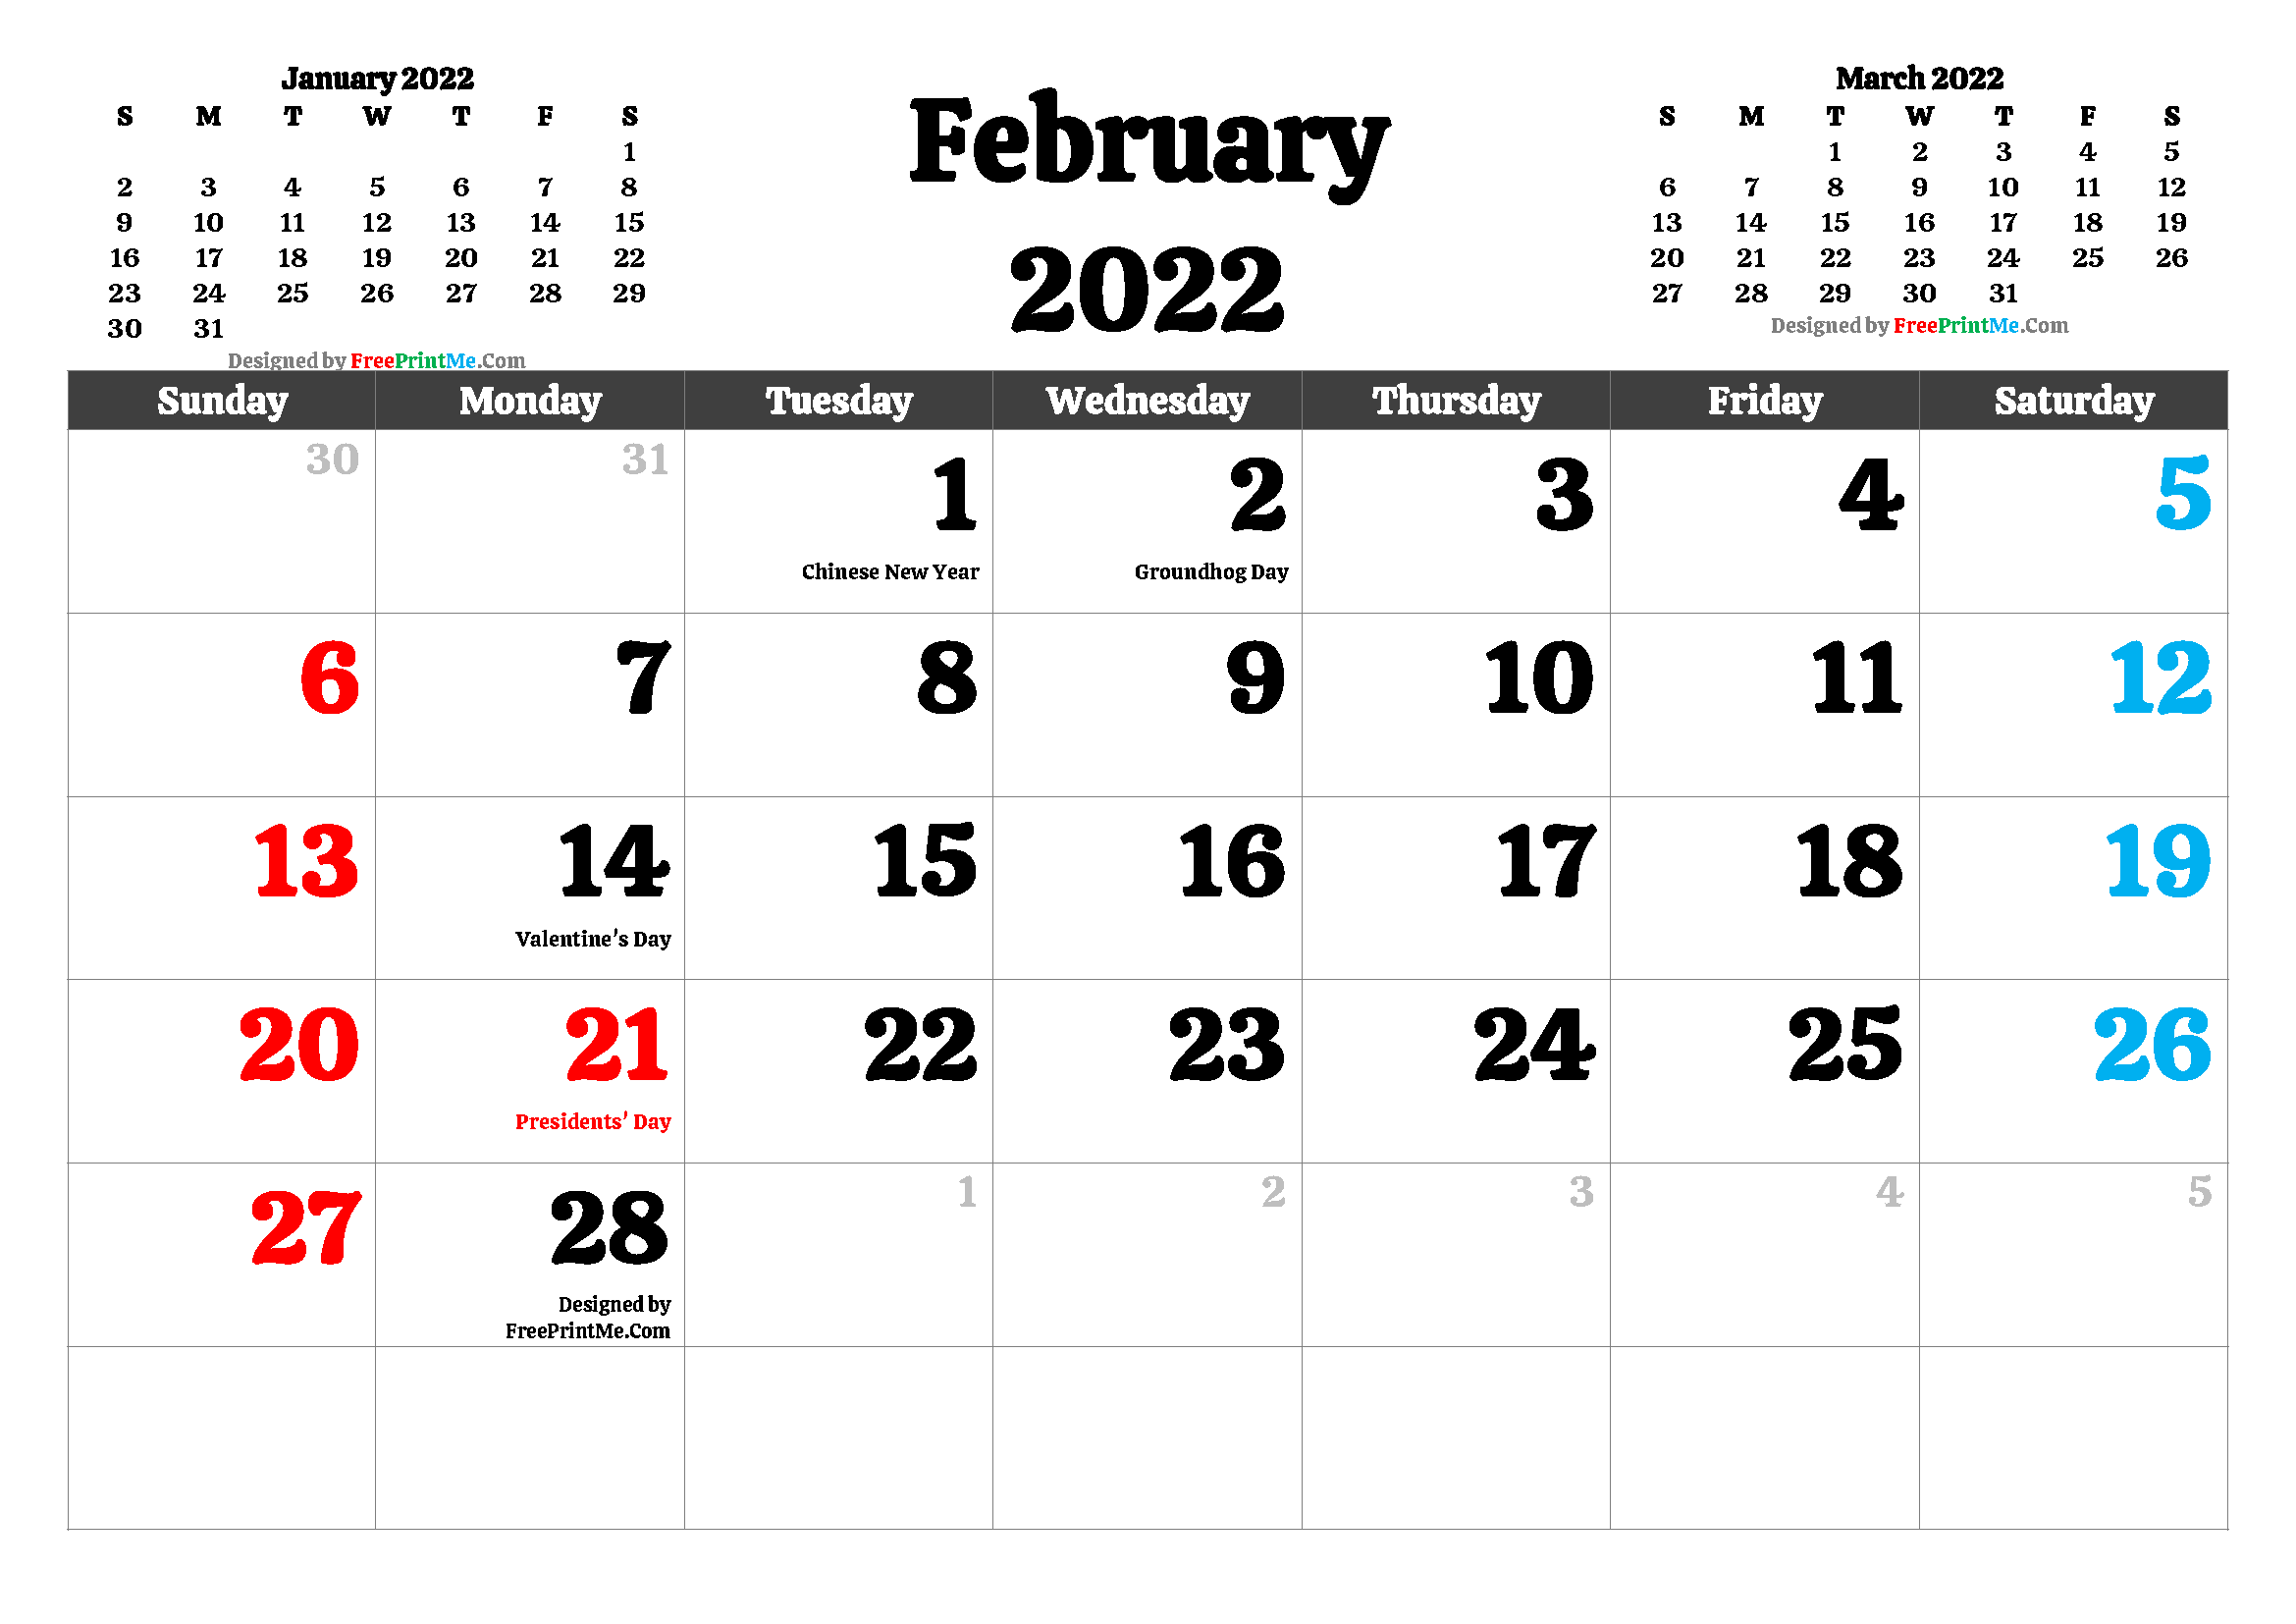 Feb 2022 Calendar With Holidays Free Printable February 2022 Calendar Pdf And Image